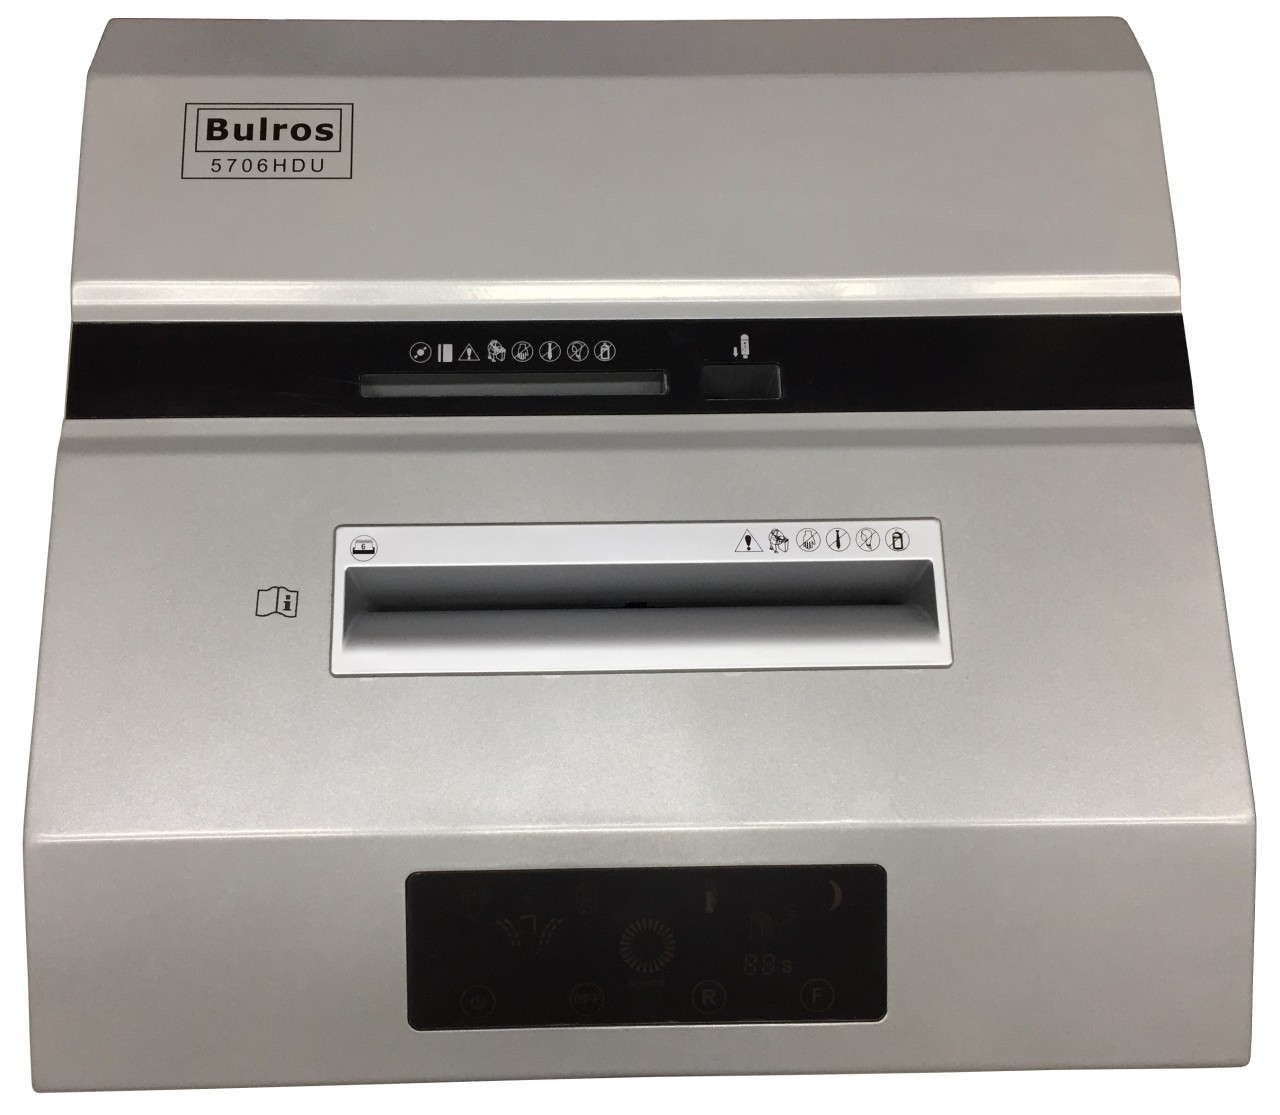 Шредер Bulros 5706HDU, 1x2 мм бумага, 2x6 мм CD/DVD